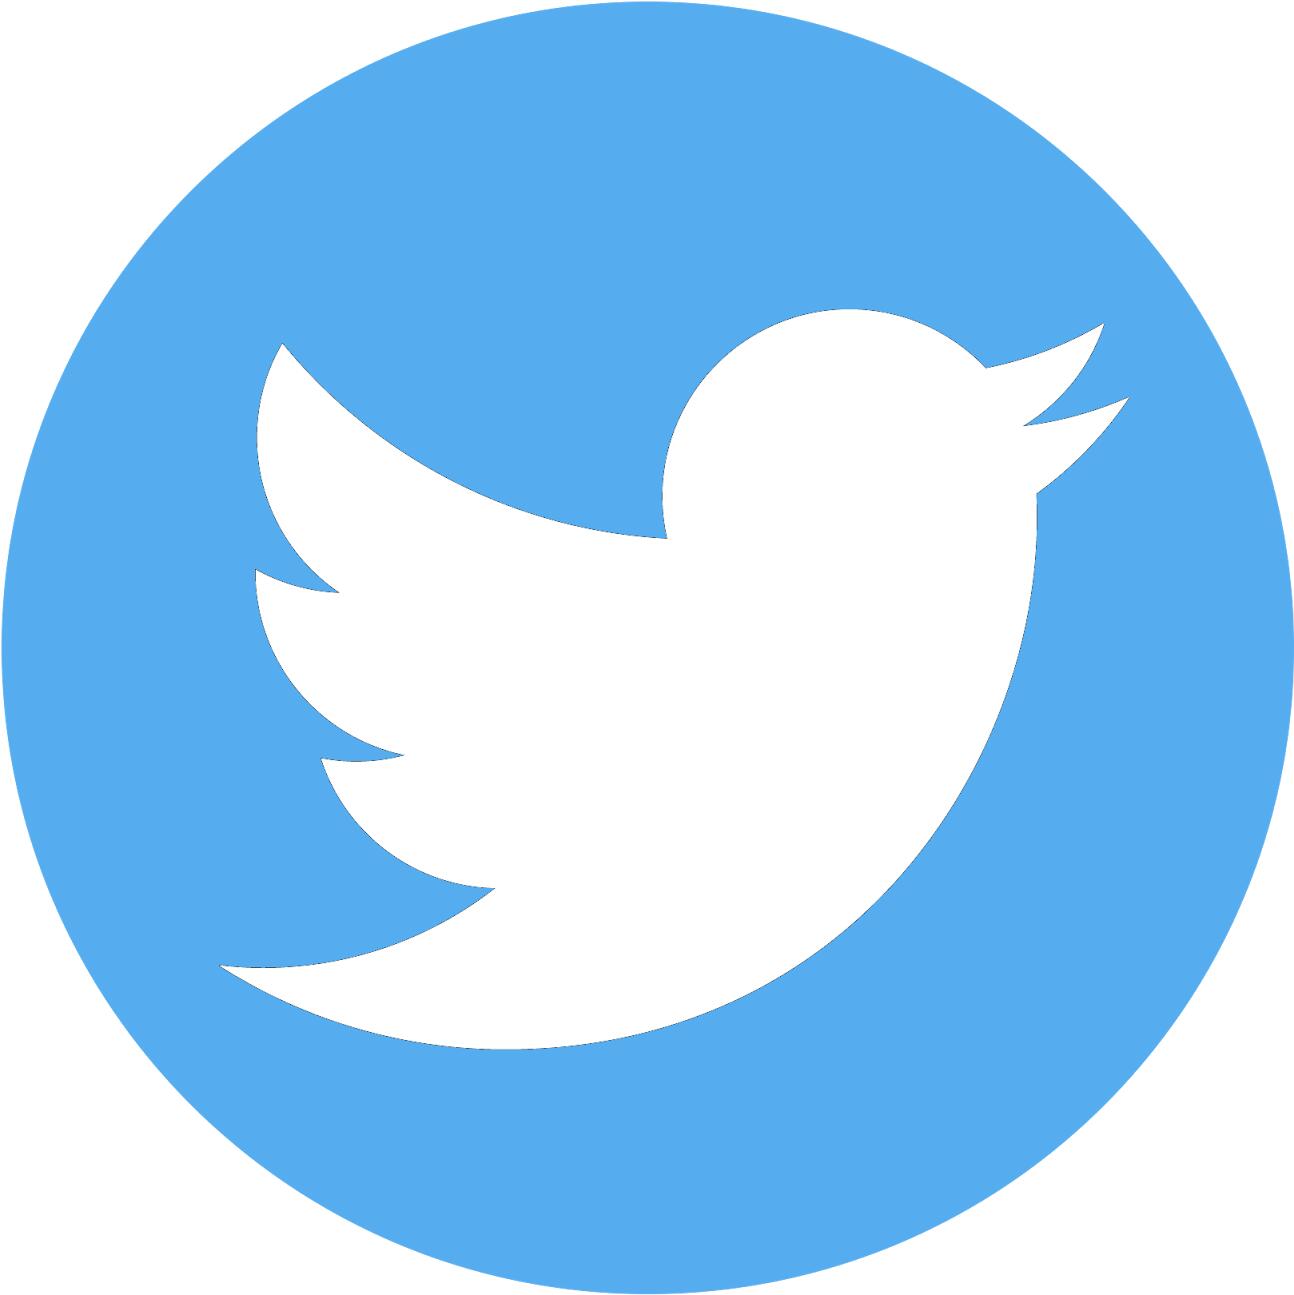 Twitter logo (large)